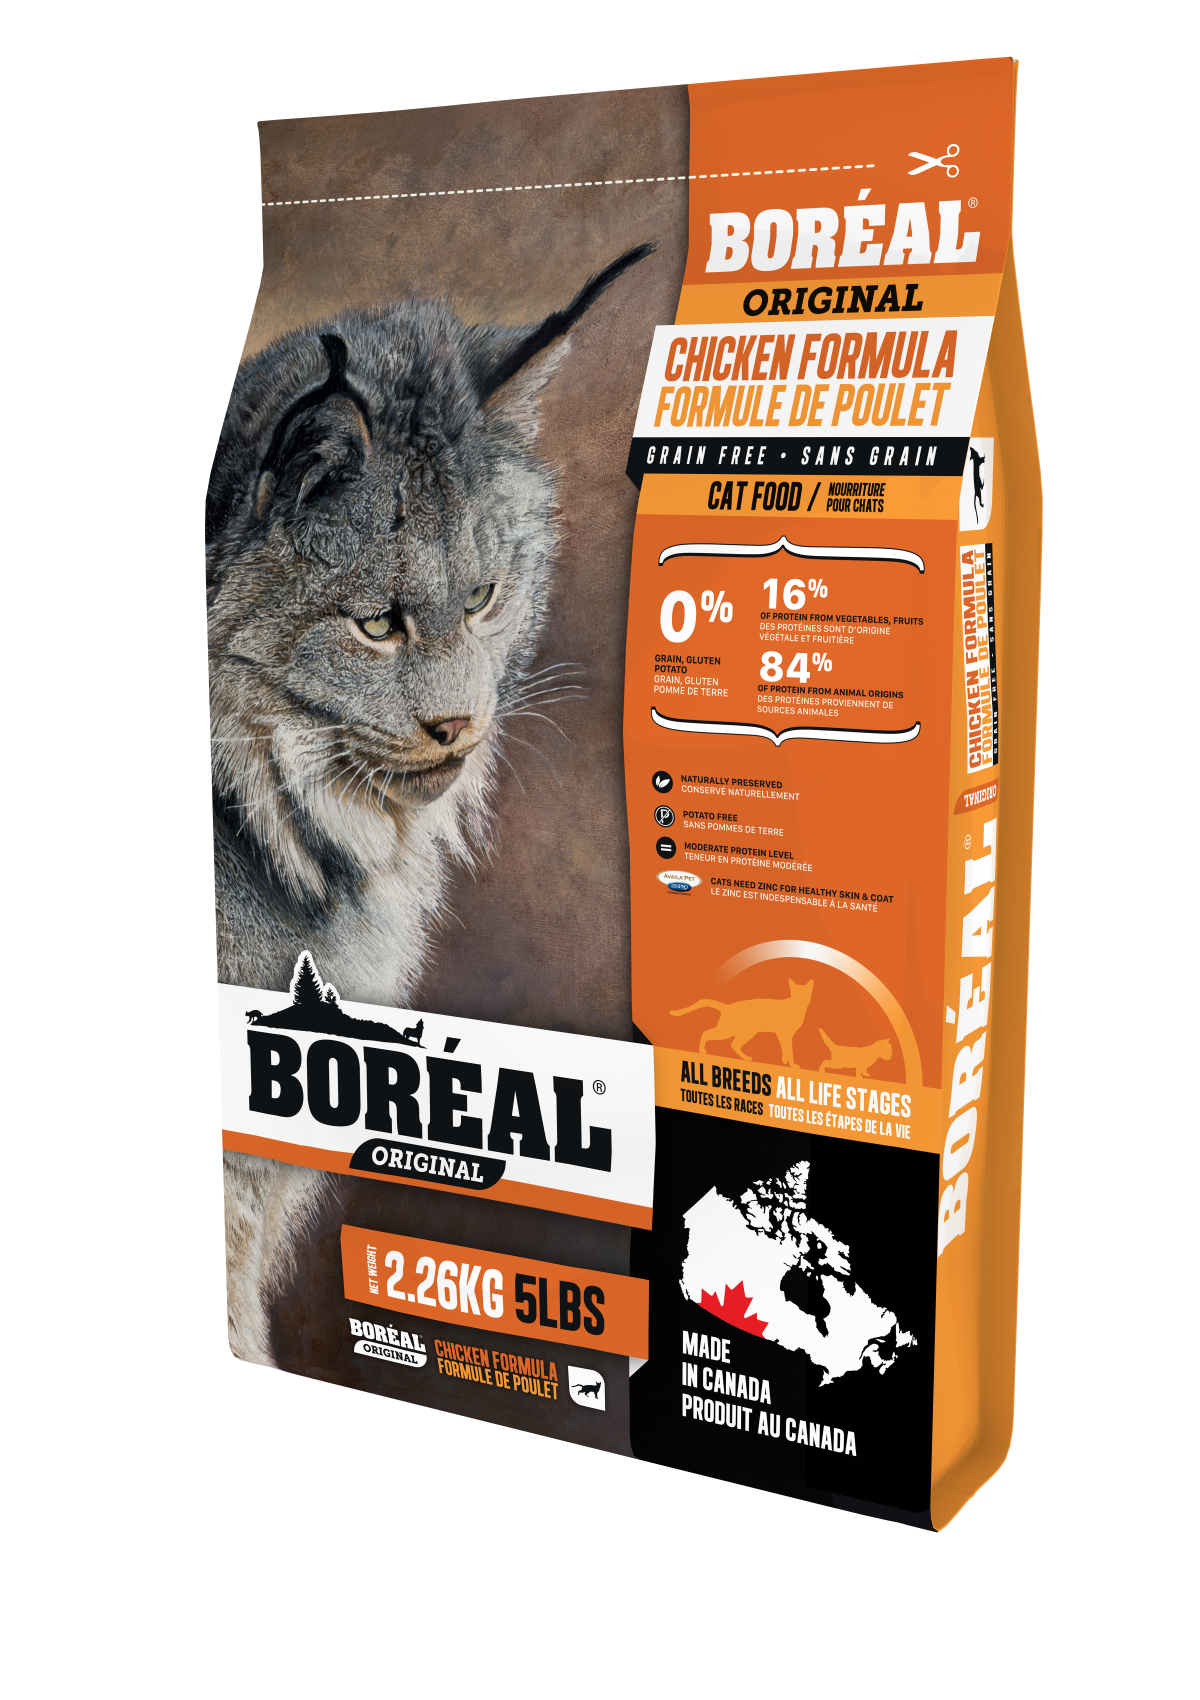 Boreal Premium Cat Food | Grain-Free Formula | Original Chicken Recipe